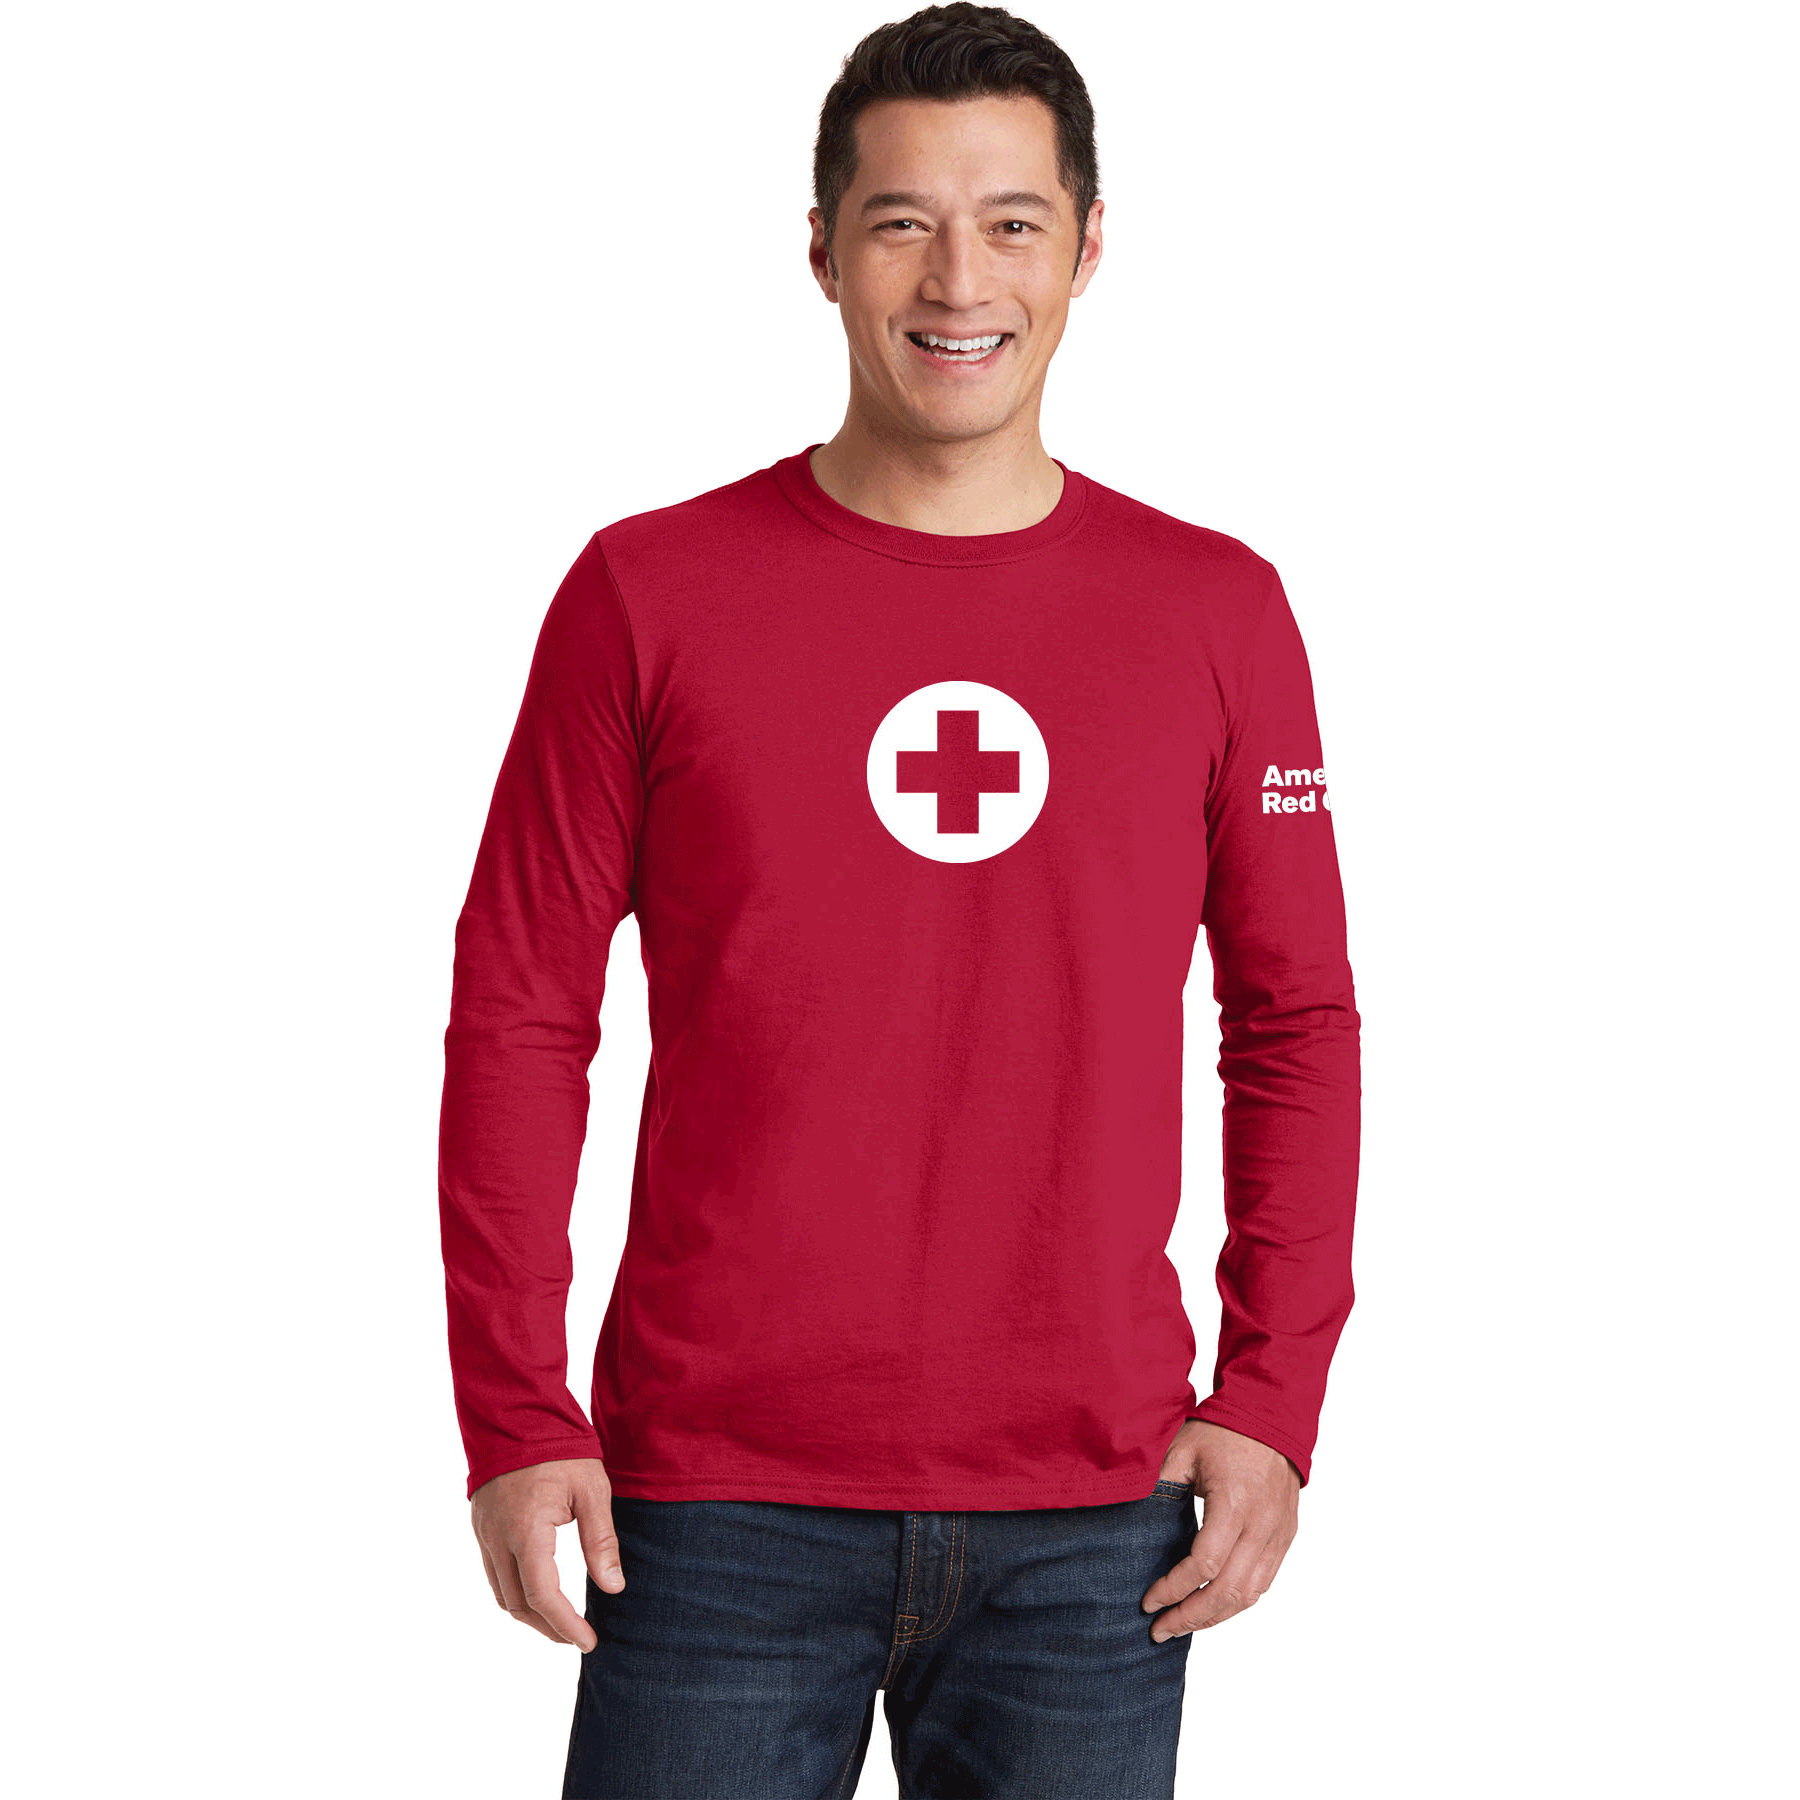 red cross free t shirt 2019